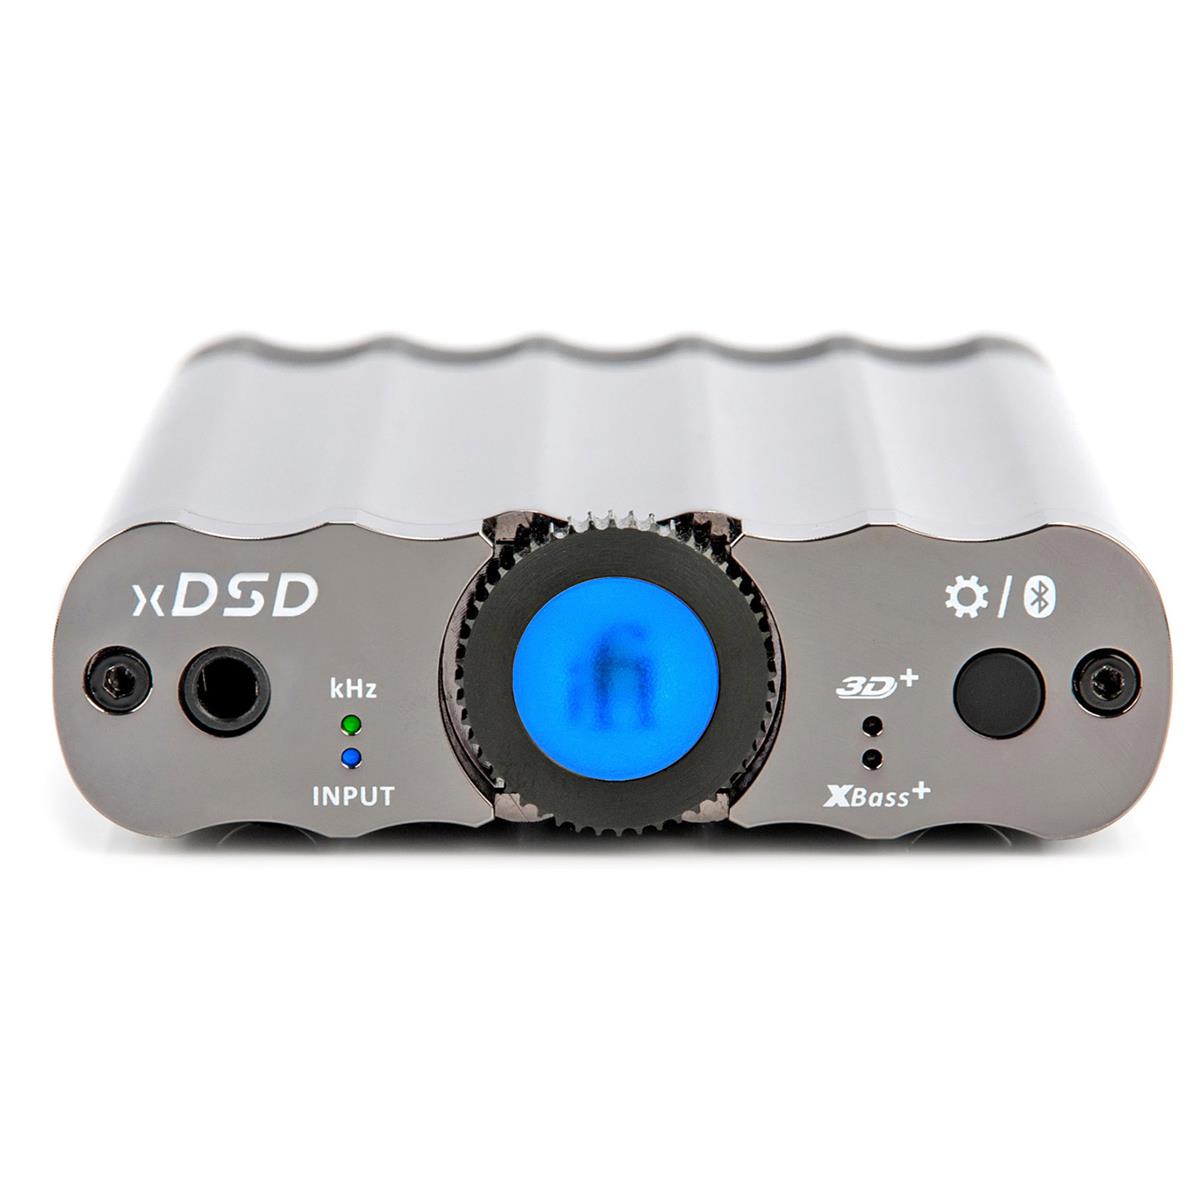 iFi AUDIO xDSD Portable Bluetooth USB DAC & Headphones Amplifier $169 + Free Shipping